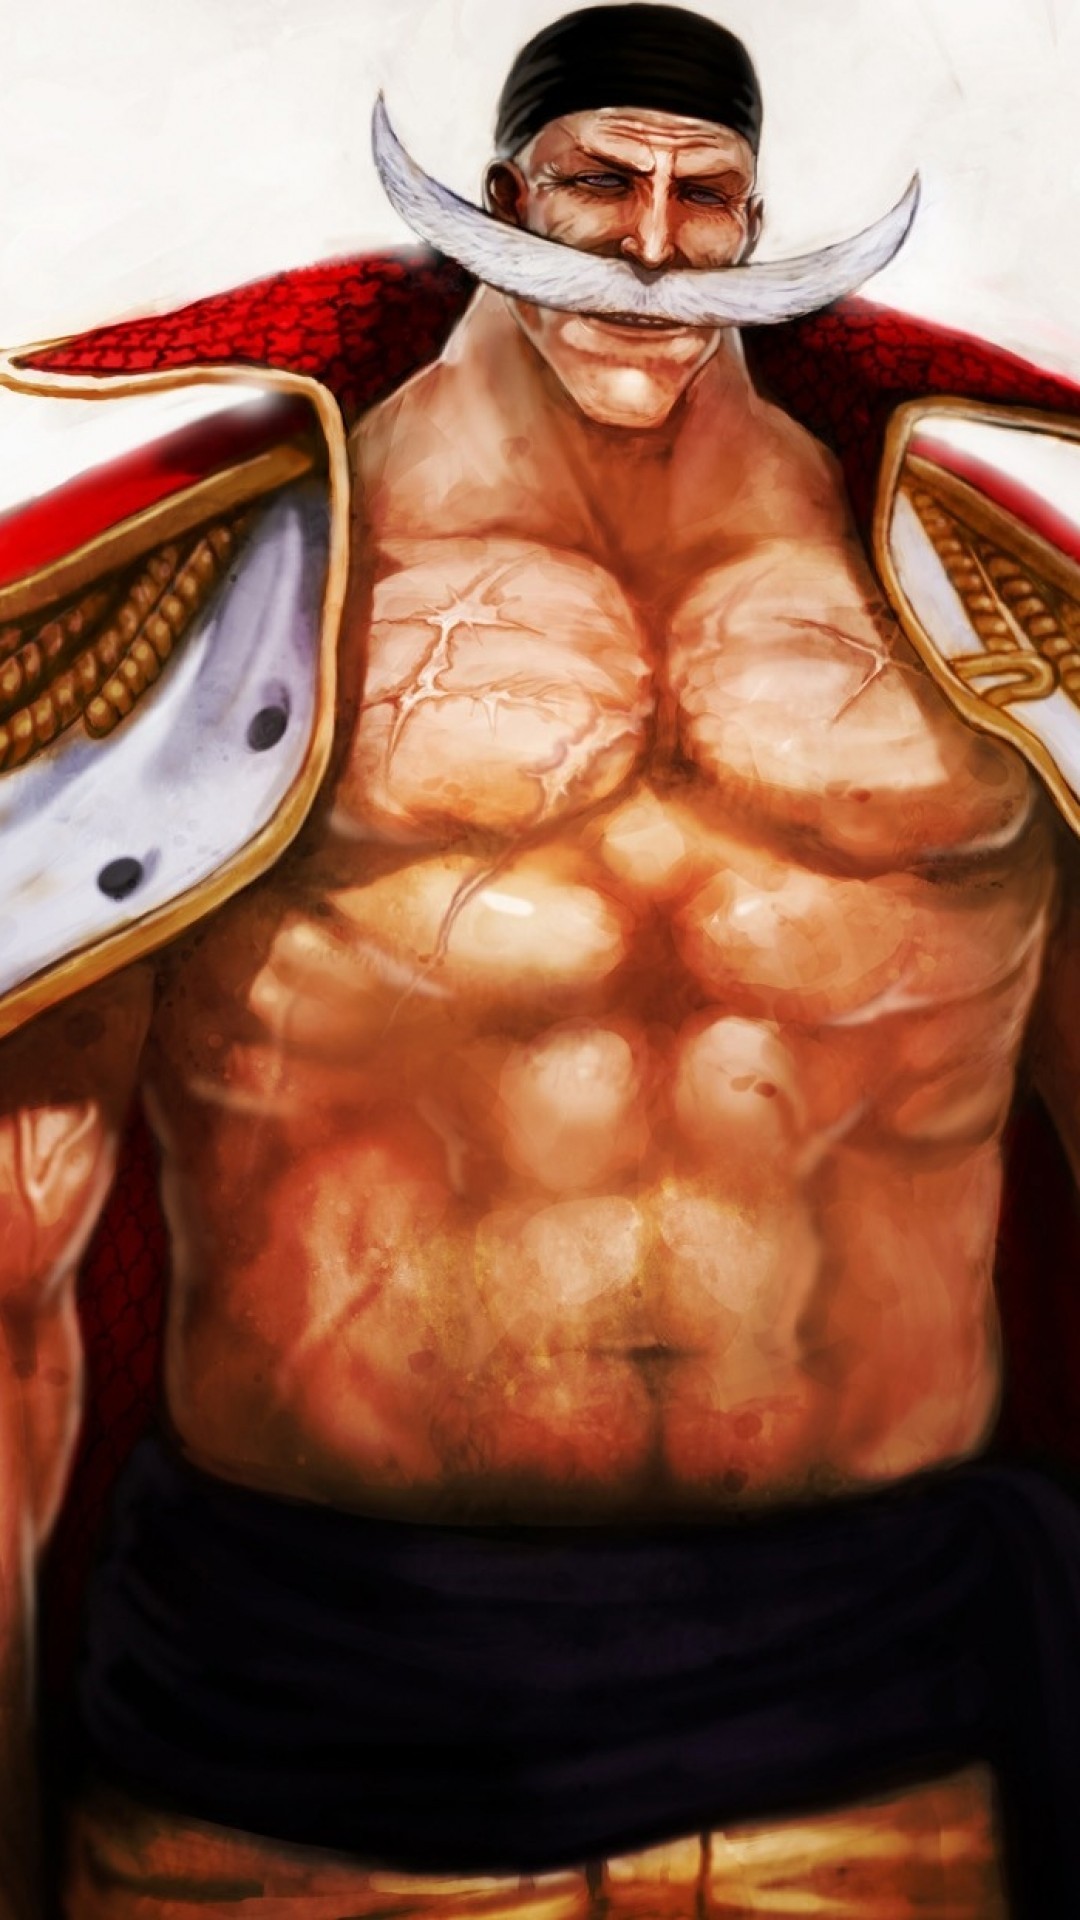 edward newgate wallpaper,bodybuilding,bodybuilder,muscle,abdomen,chest